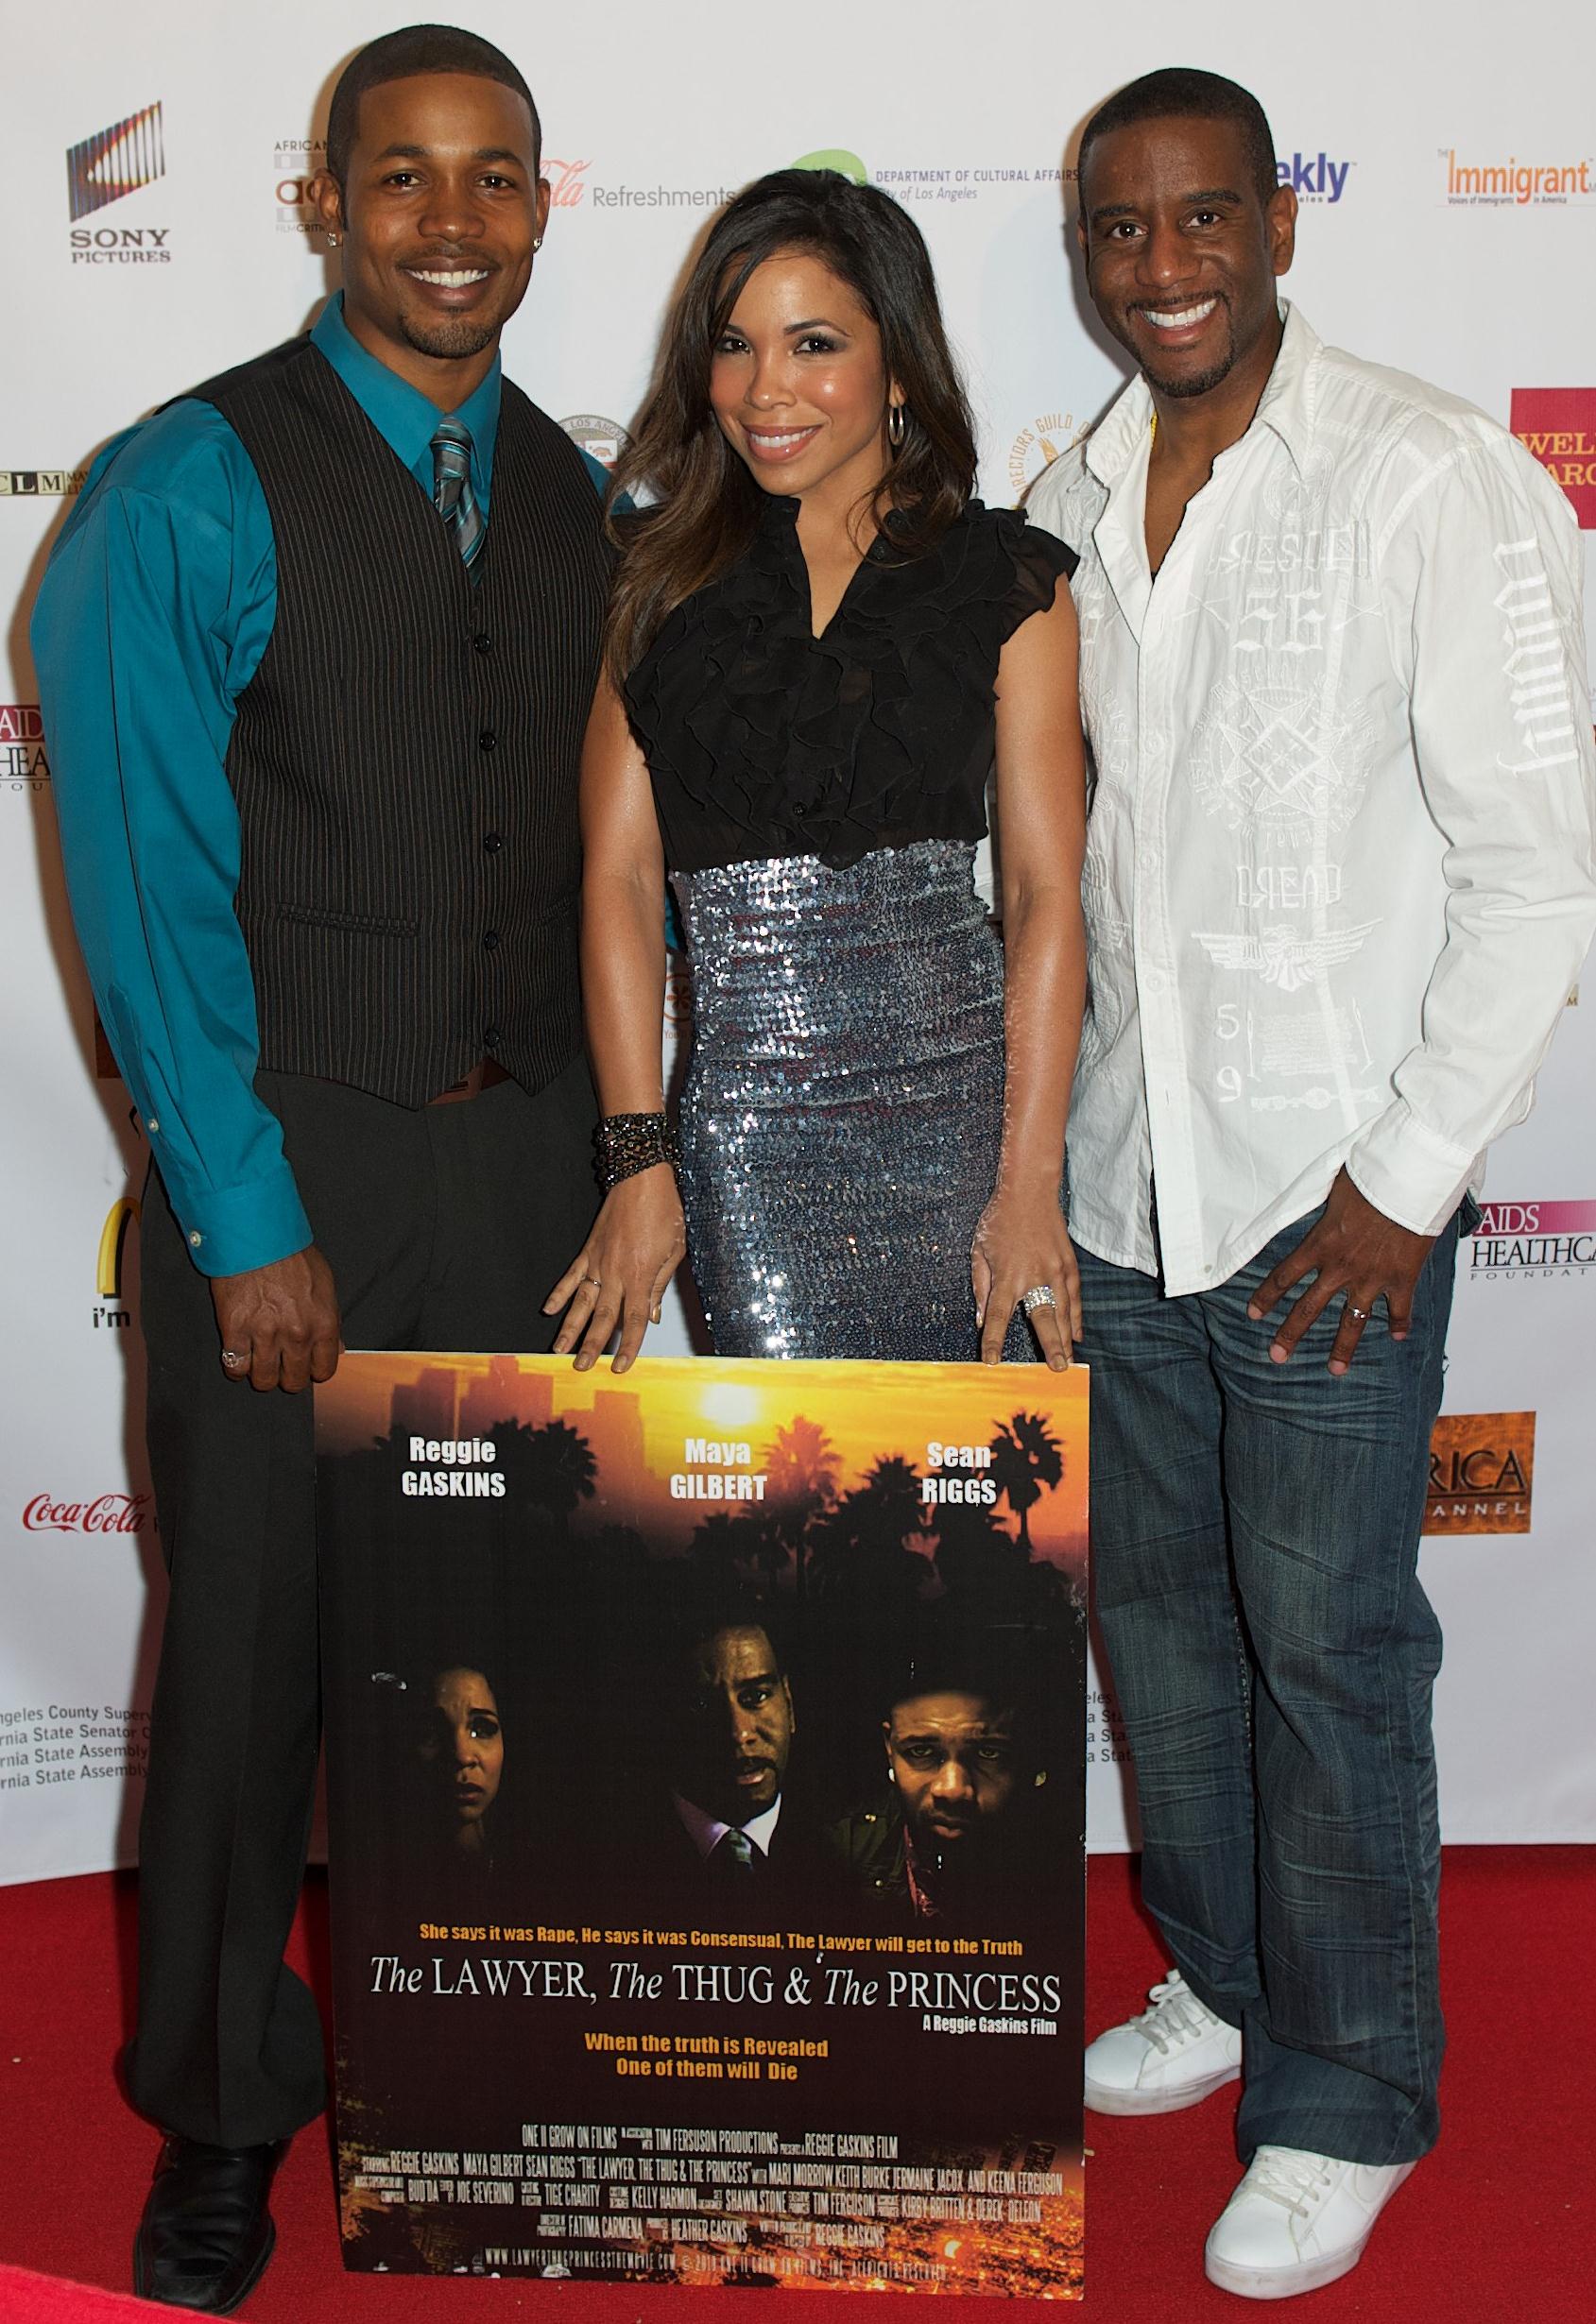 Reggie Gaskins, Maya Gilbert and Sean Riggs at the Pan African Film Festival Red Carpet for 